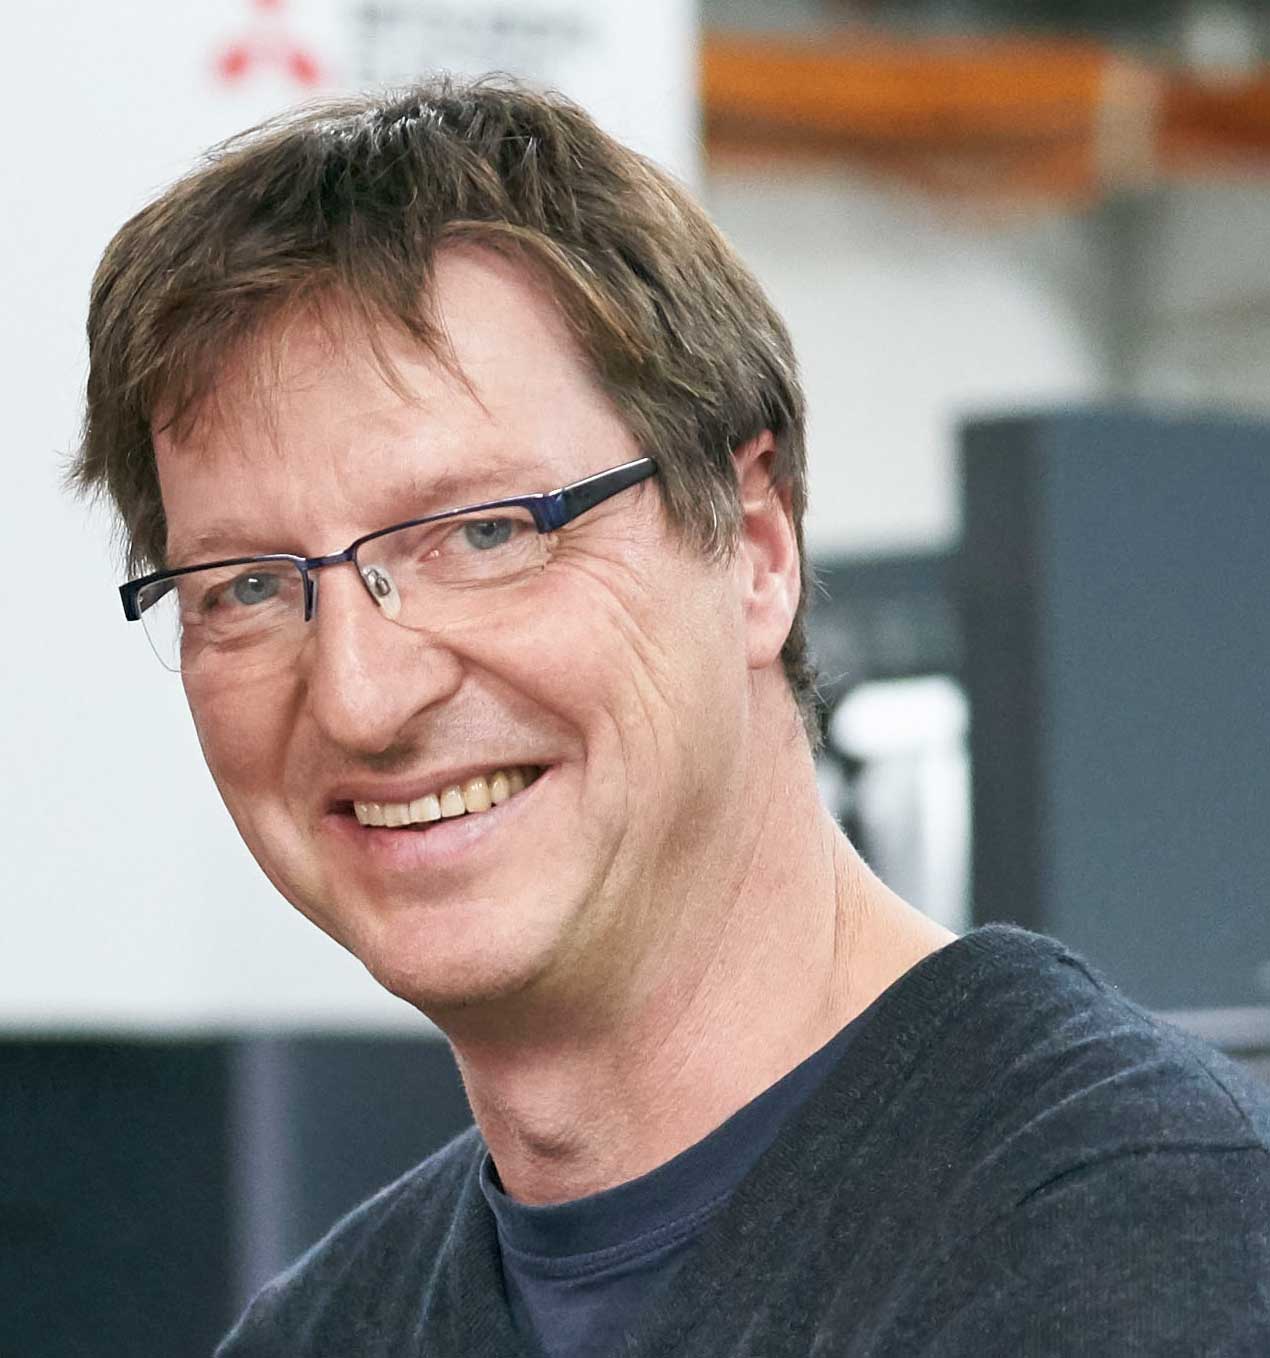 Clemens Kreyenberg, Managing Director of Kreyenberg GmbH